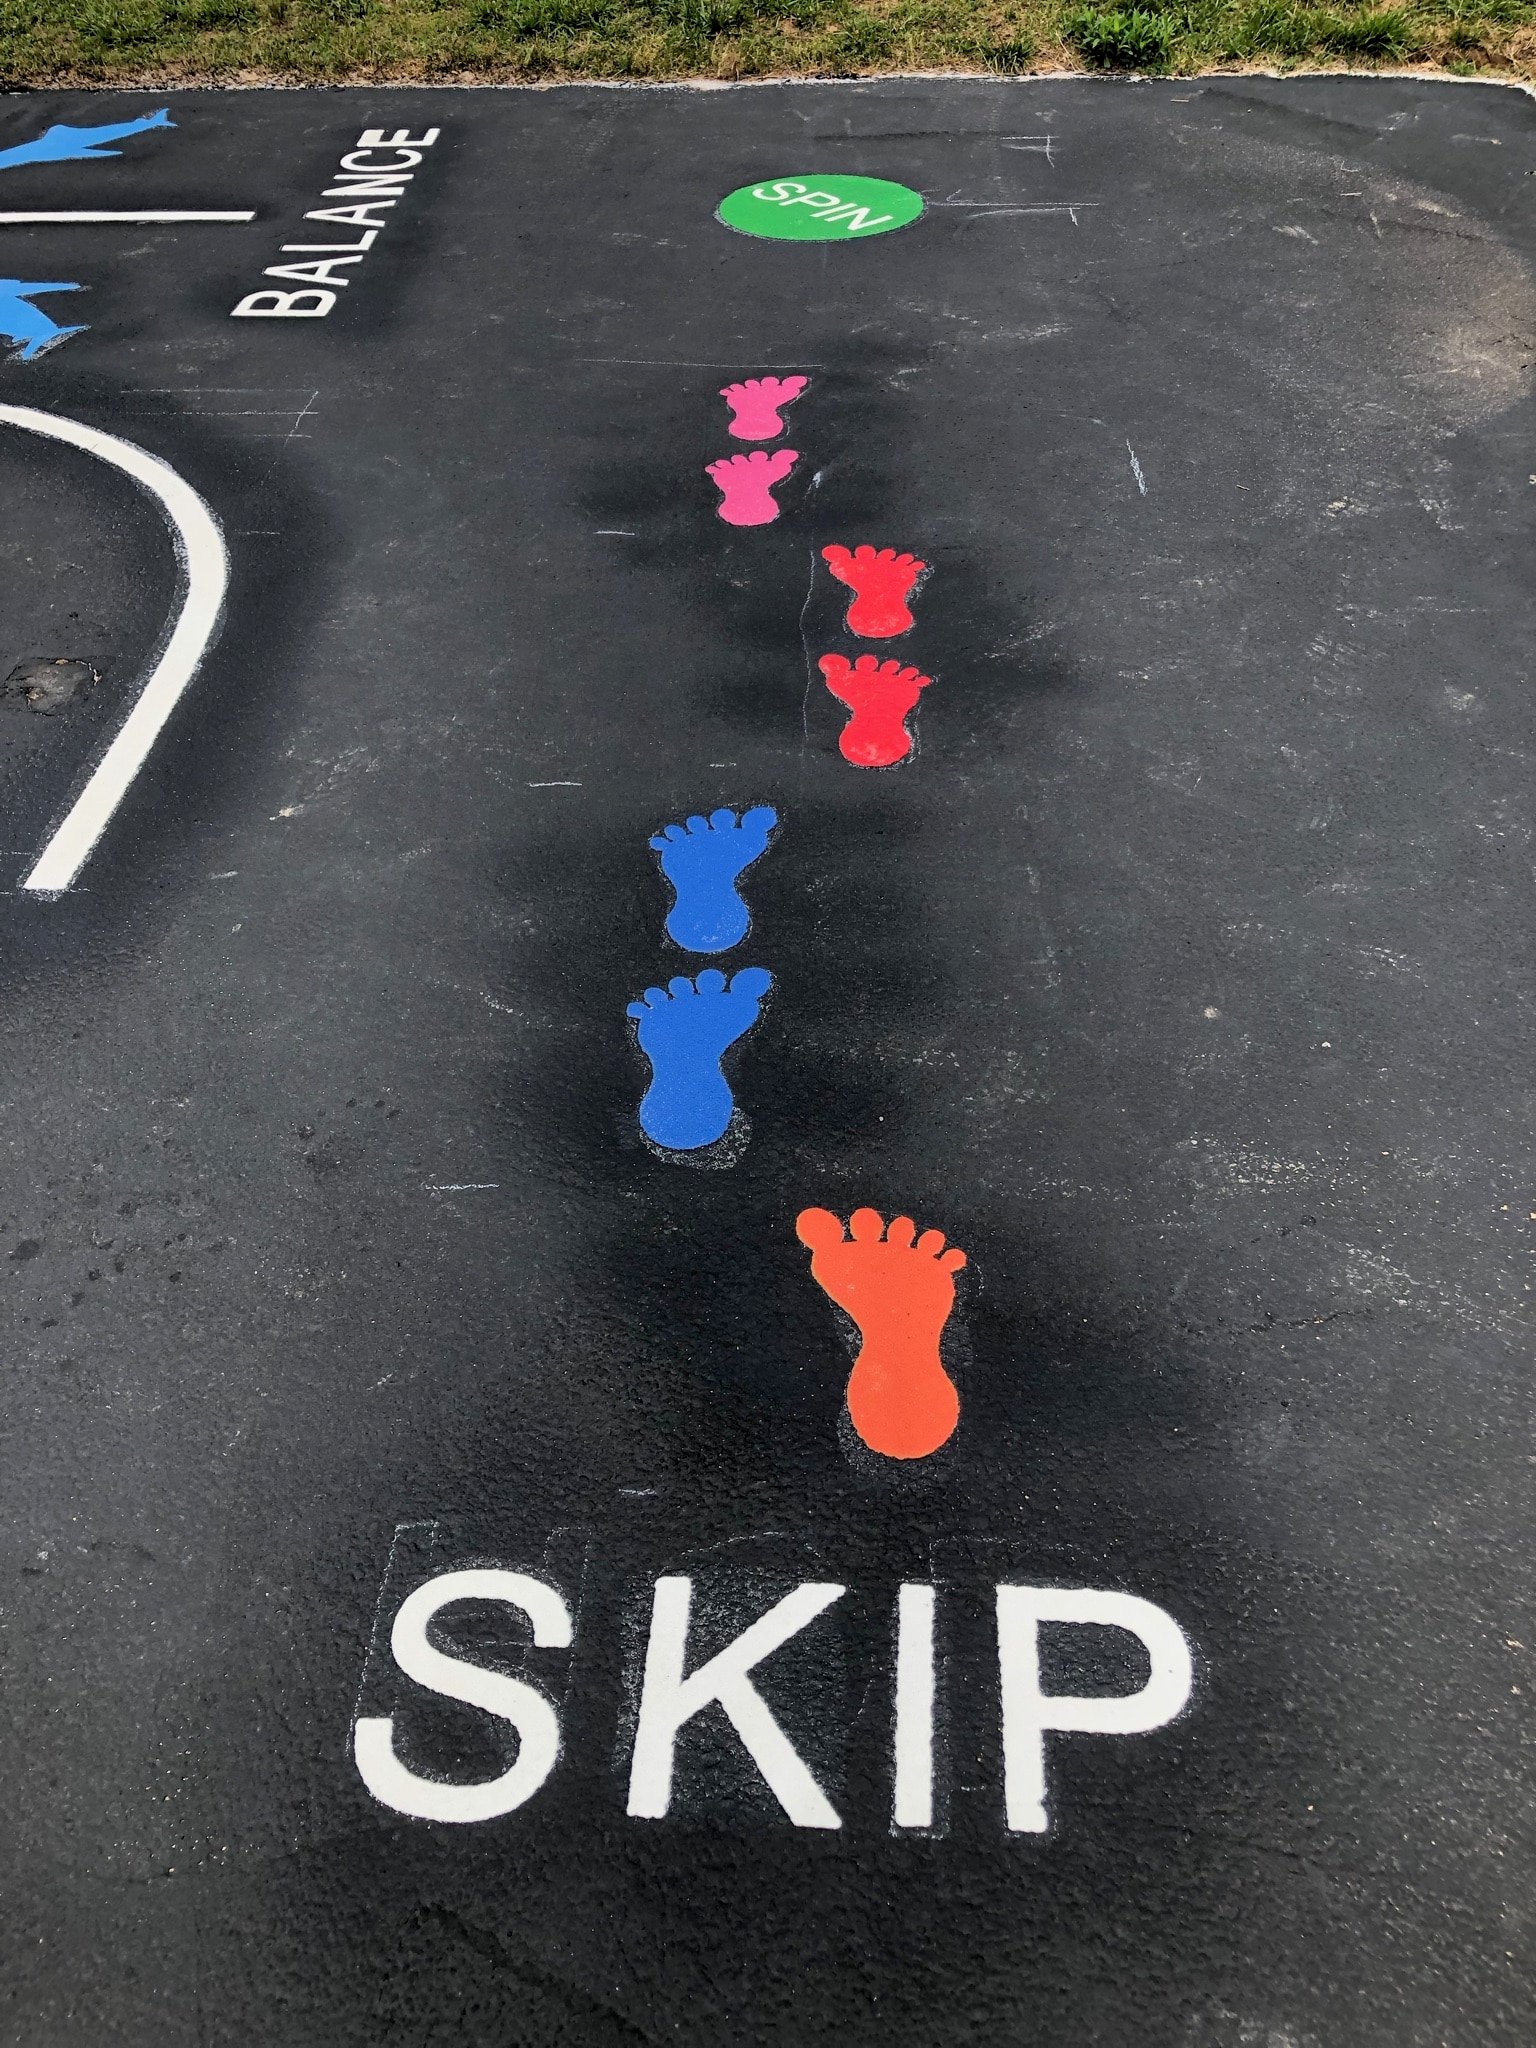 Skip playground design